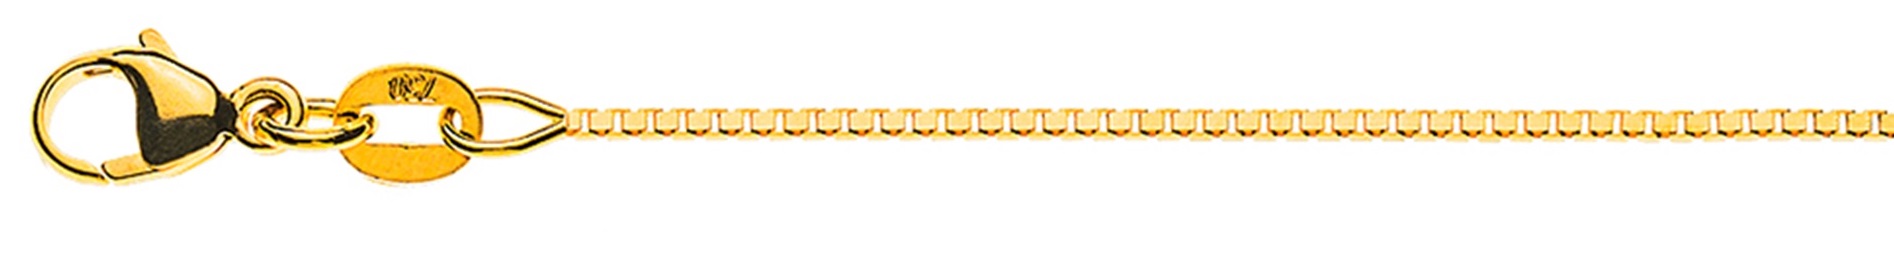 AURONOS Élégance Halskette Gelbgold 14K Venezianerkette diamantiert 50cm 0.9mm